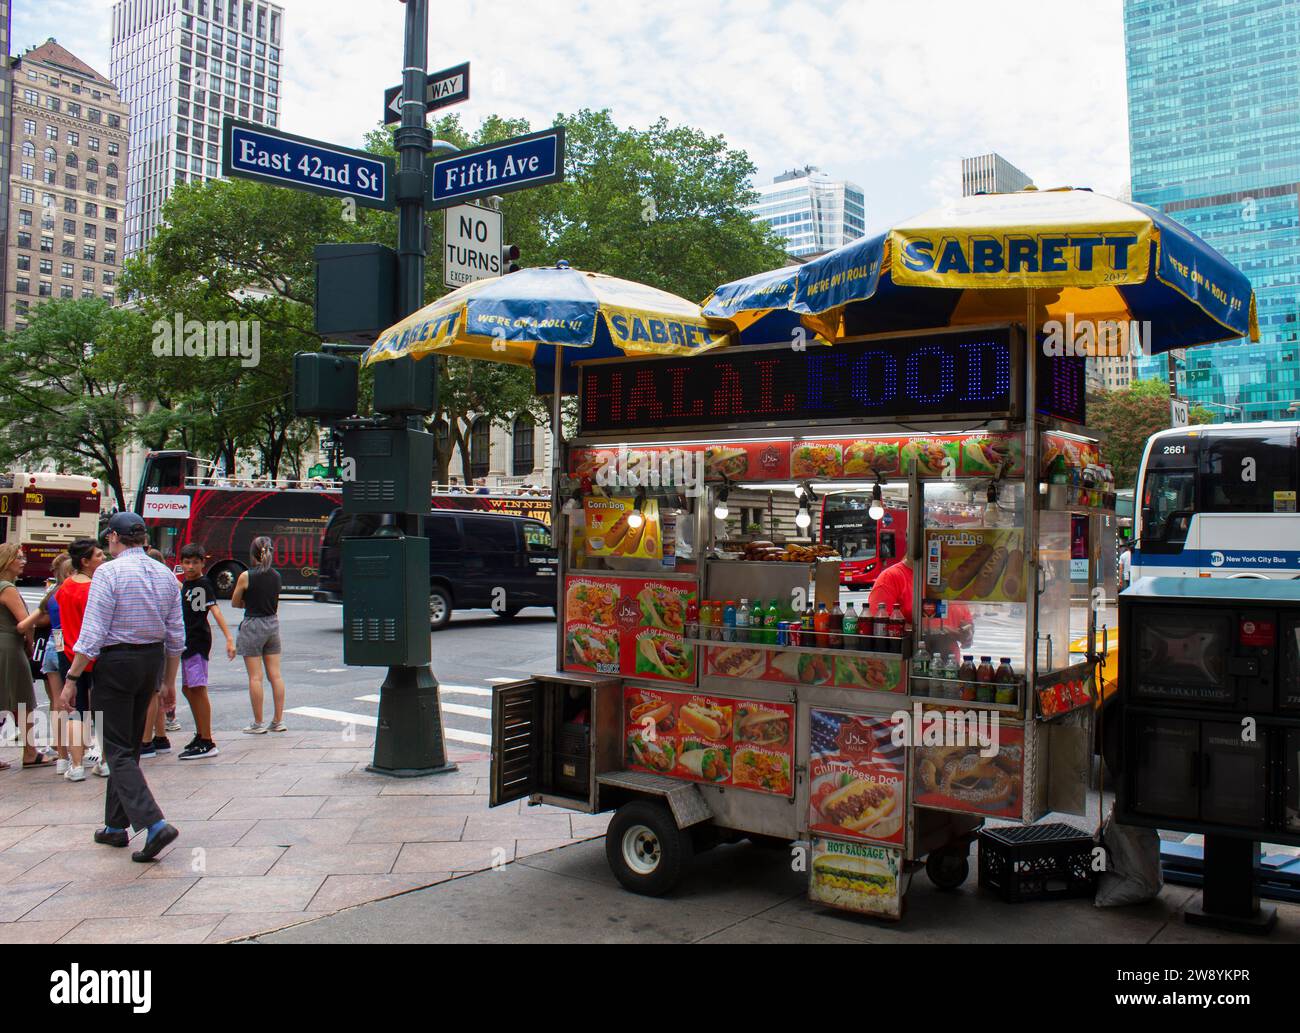 East 42nd St and Fifth Ave, New York City, NY, USA - juillet 3 2023 : camion de nourriture dans la rue à New York Banque D'Images